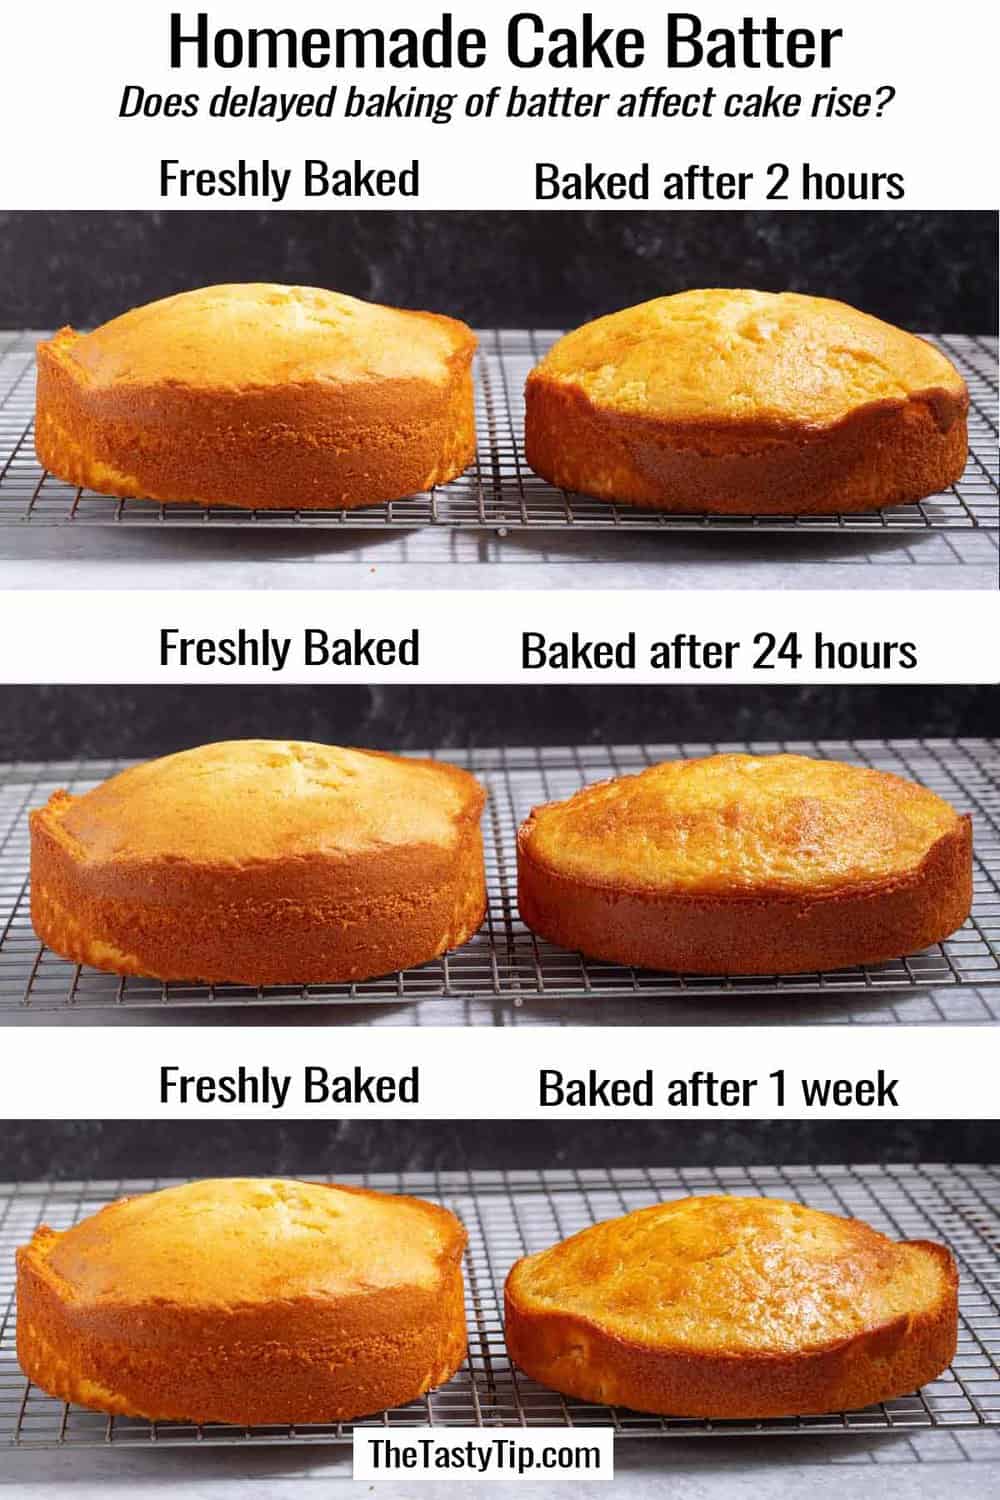 comparison of homemade cake batter freshly baked to cake batter delayed being baked